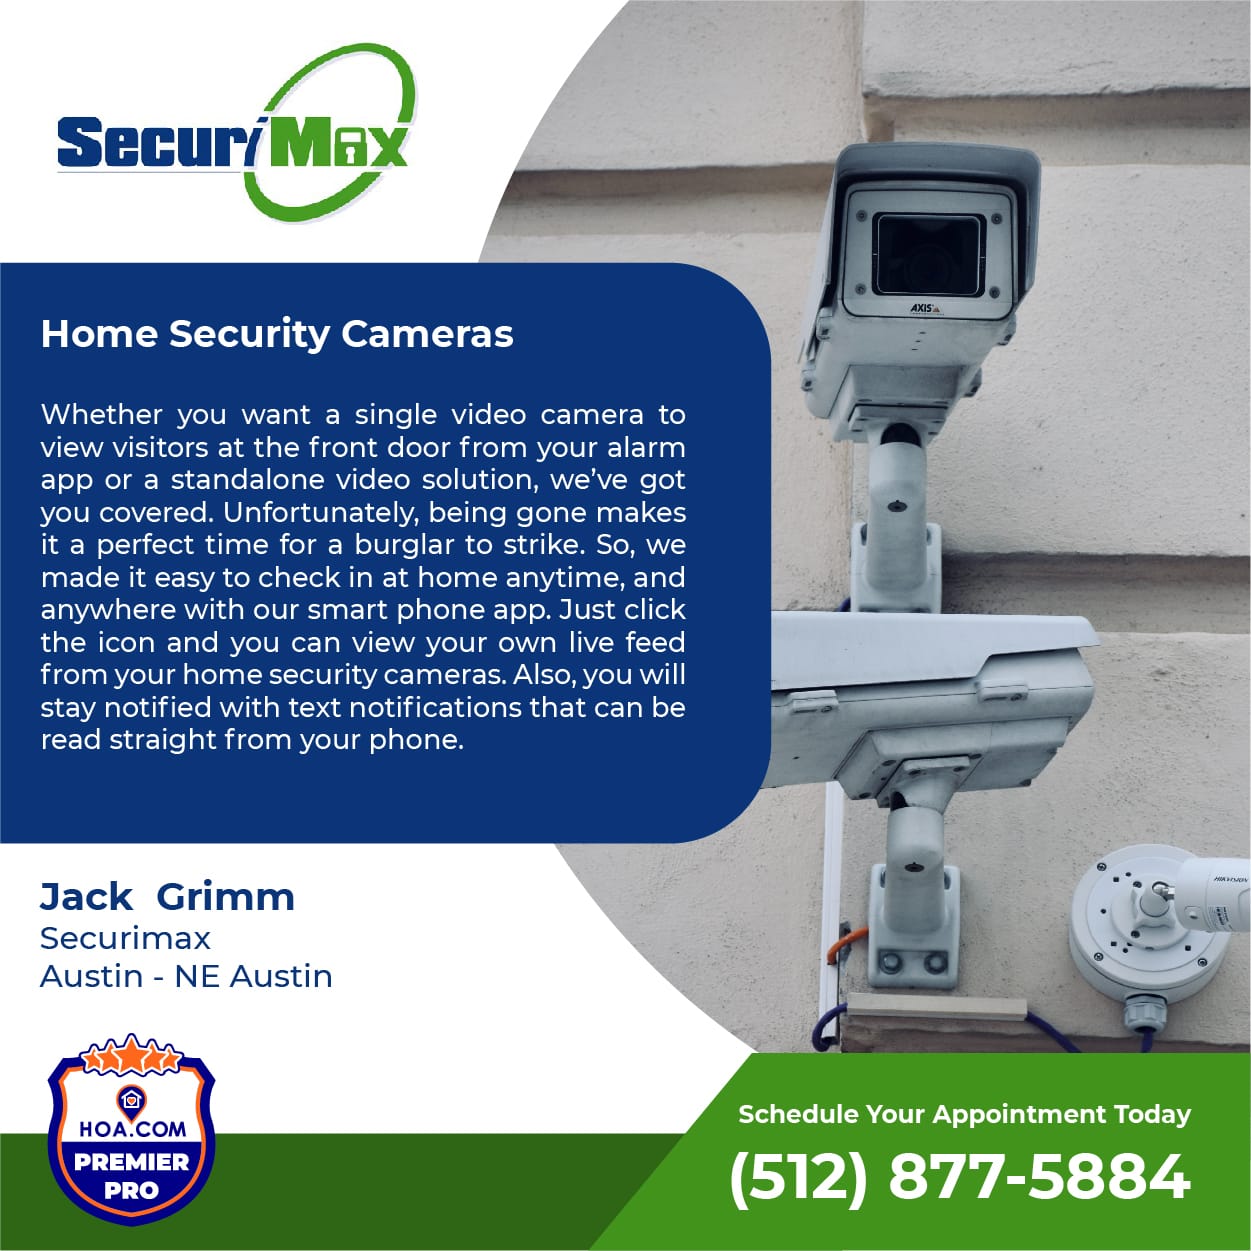 Securimax Home Security Cameras